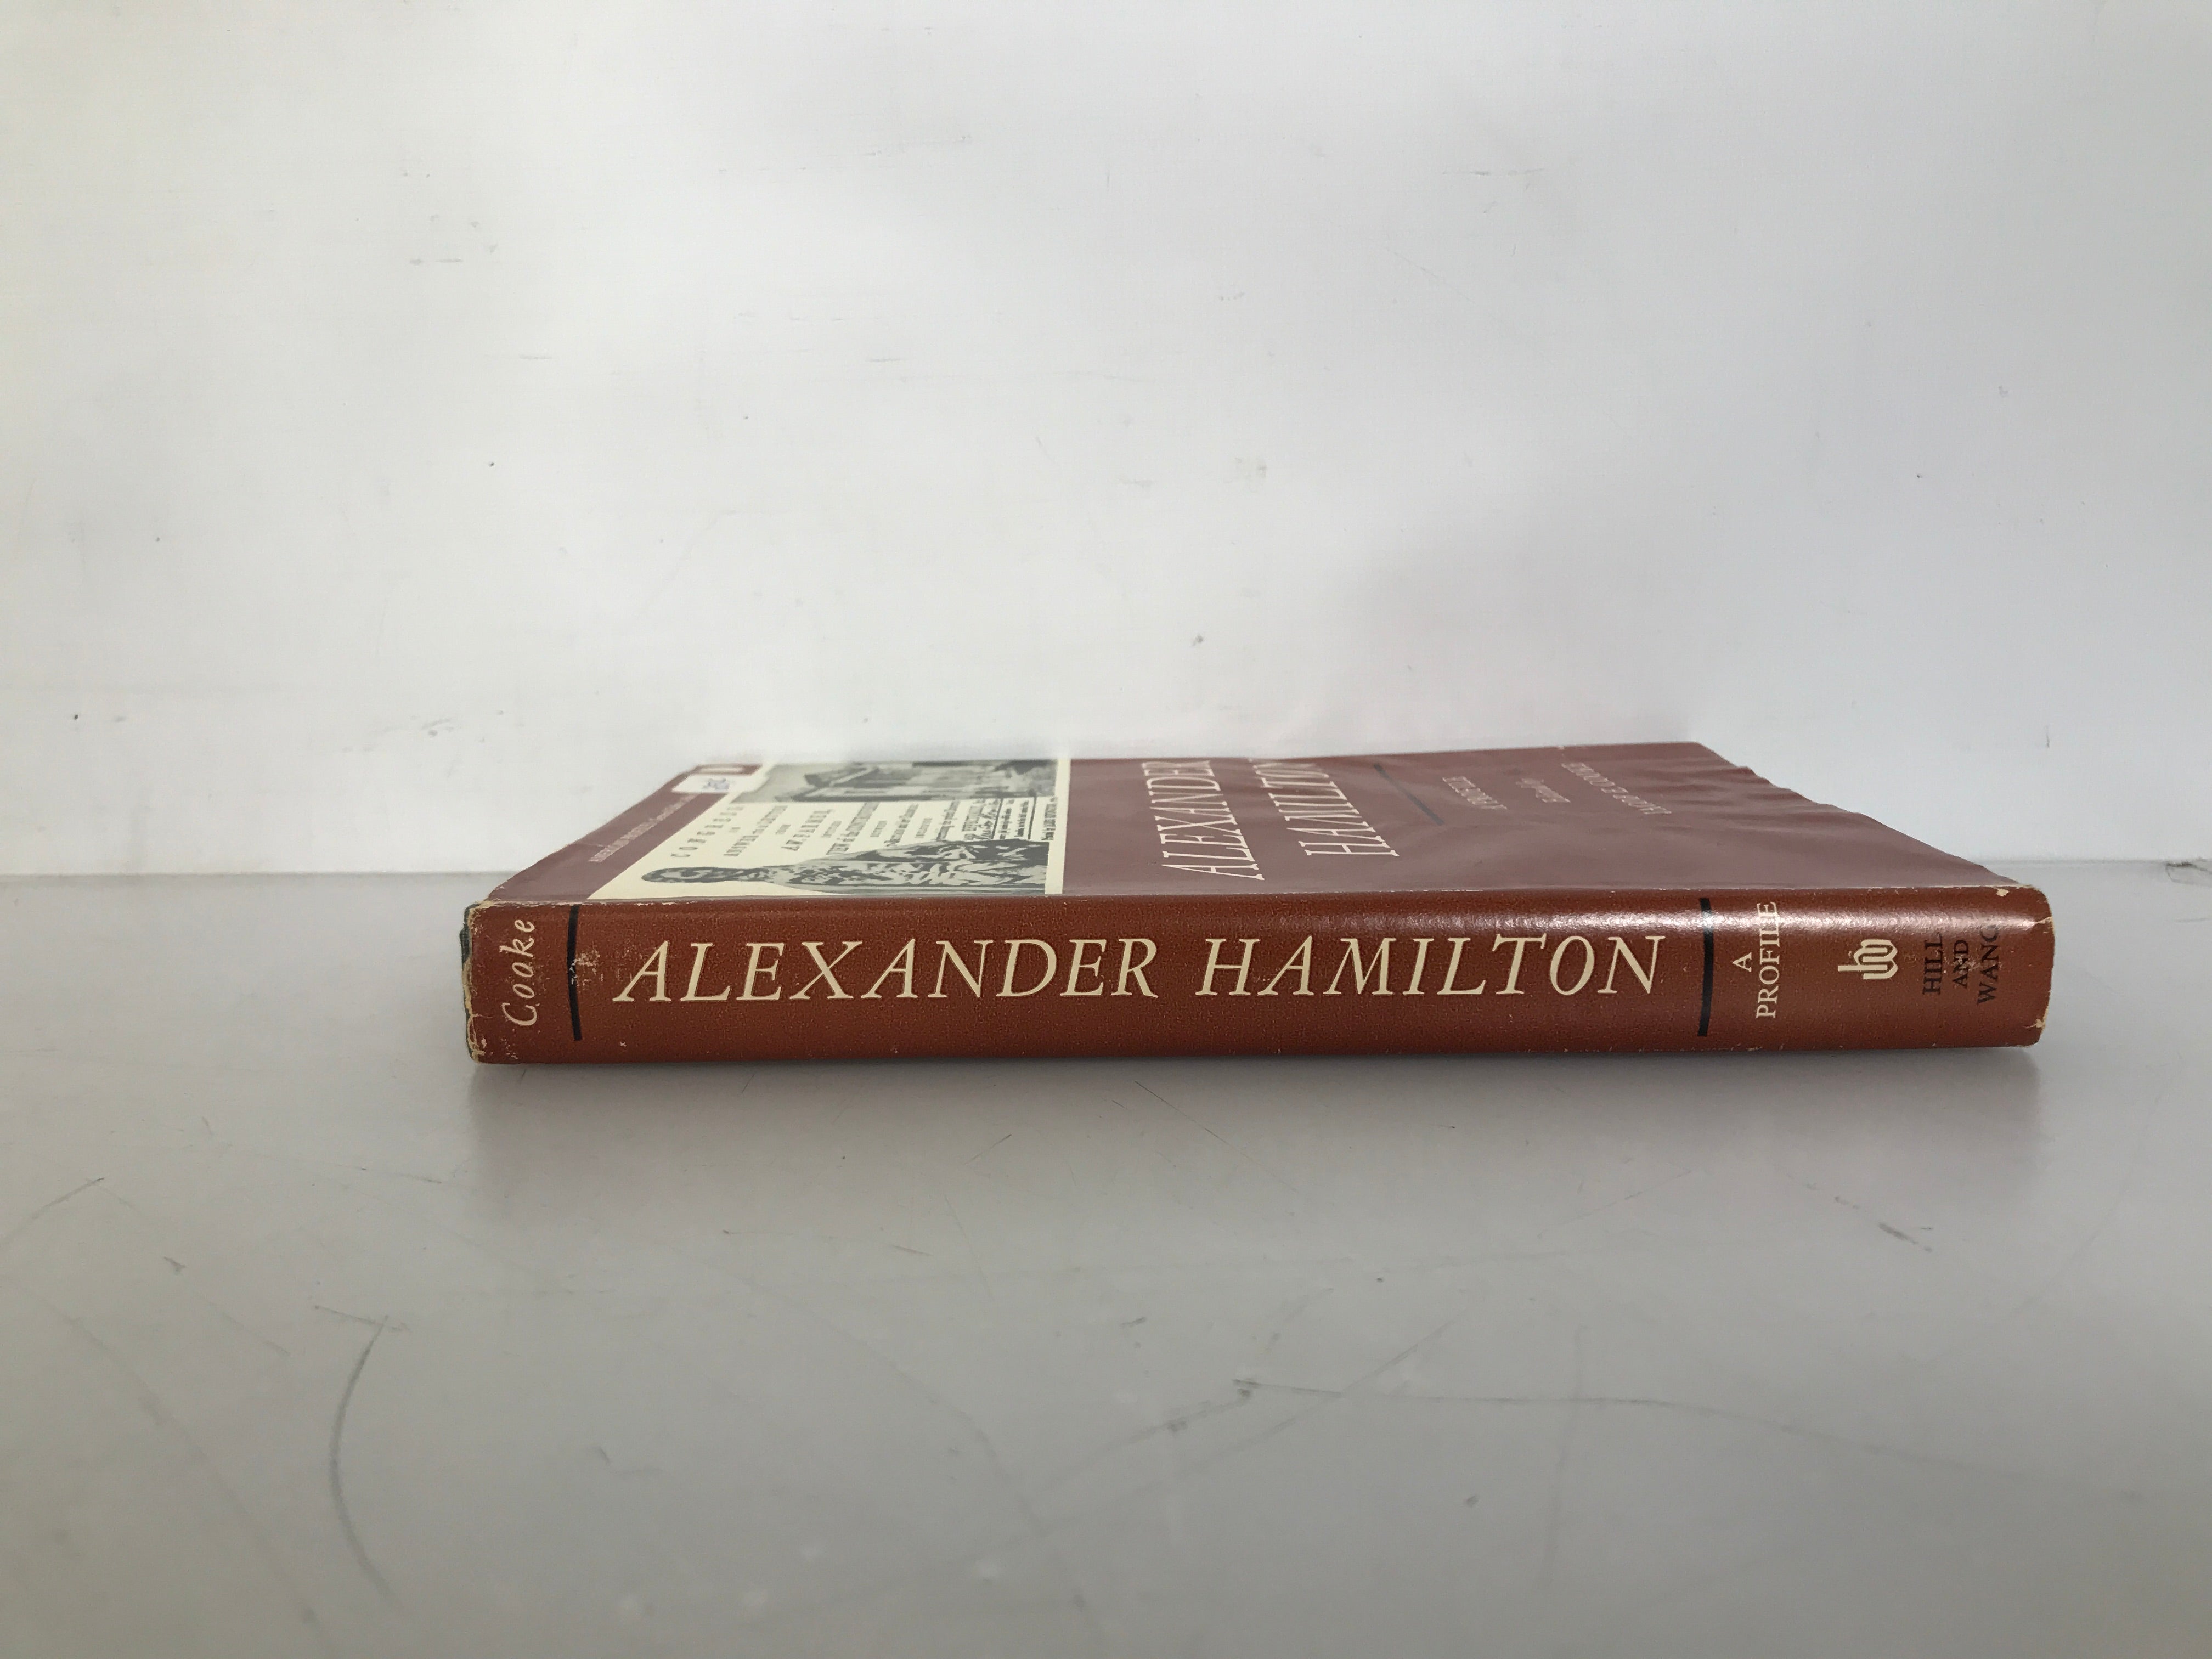 Alexander Hamilton A Profile by Jacob E. Cooke 1968 HC DJ